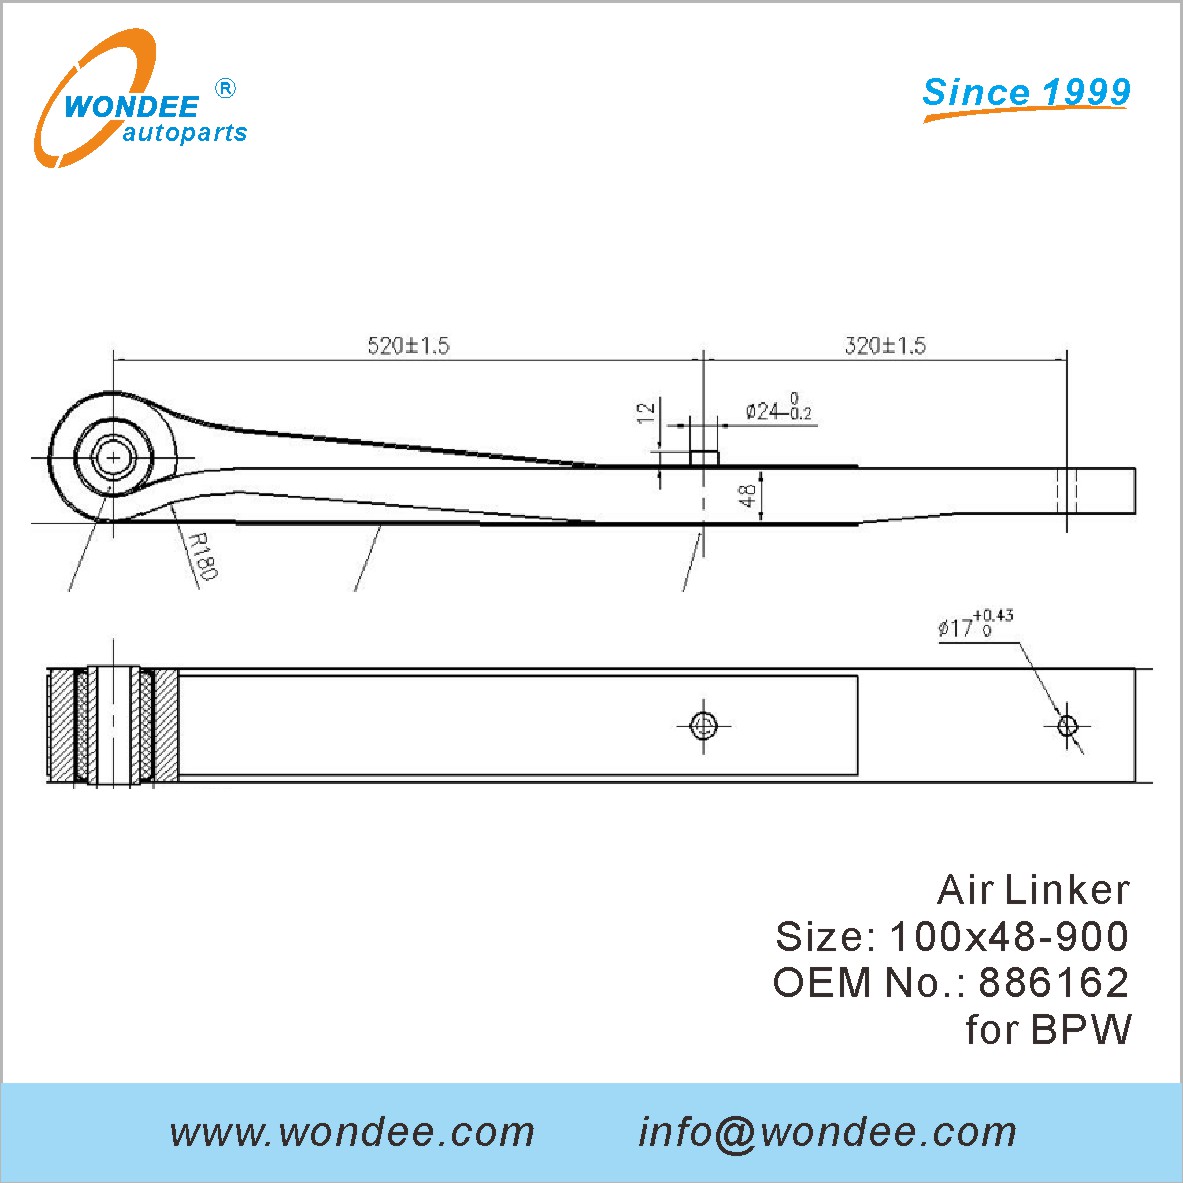 WONDEE Autoparts Air Linker OEM 886162 for BPW